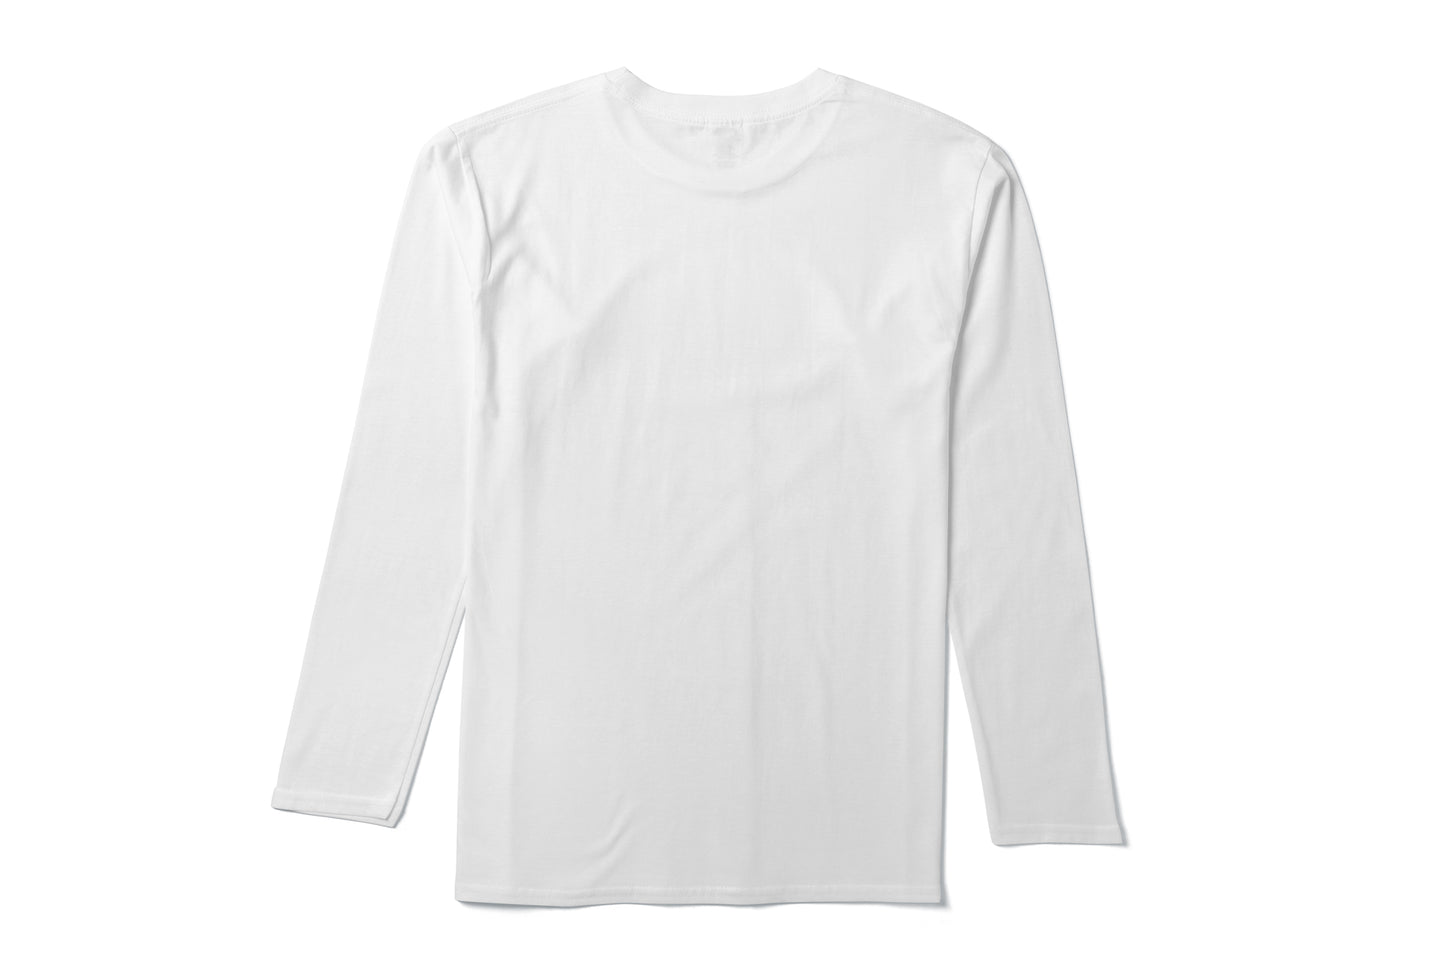 The Illest Heat Transfer on White Long Sleeve Shirt